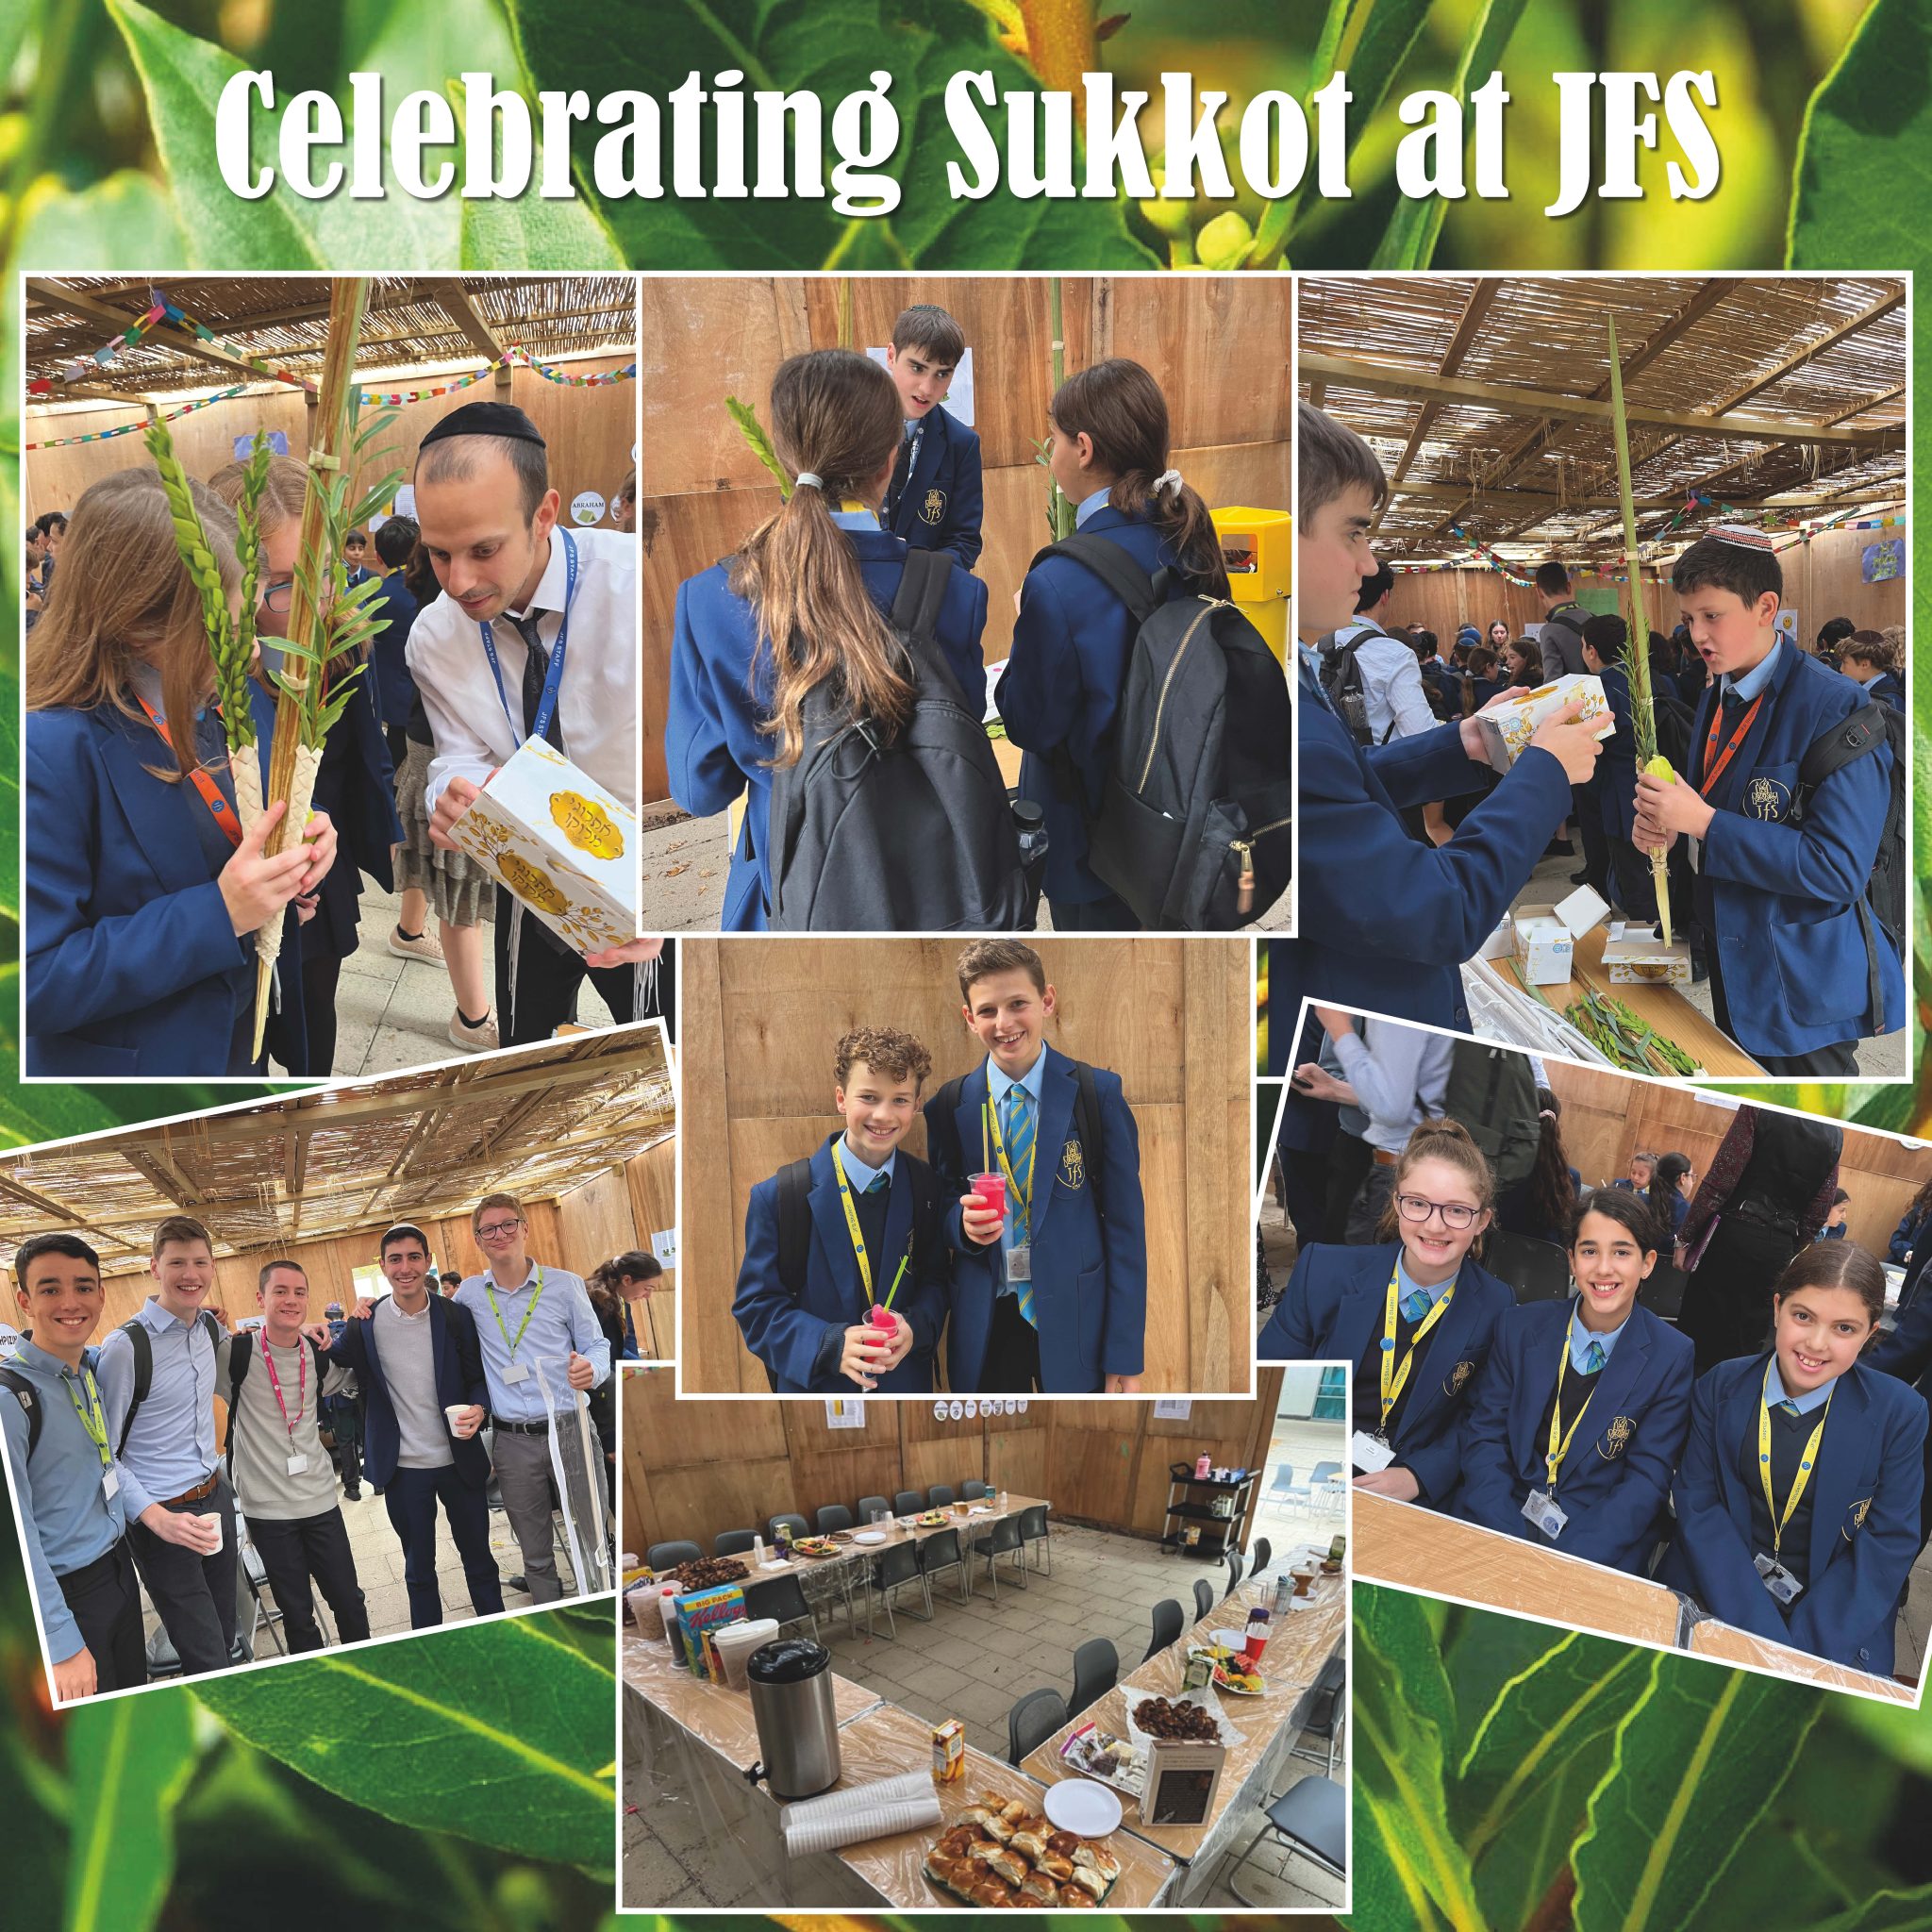 Sukkot Celebrations at JFS